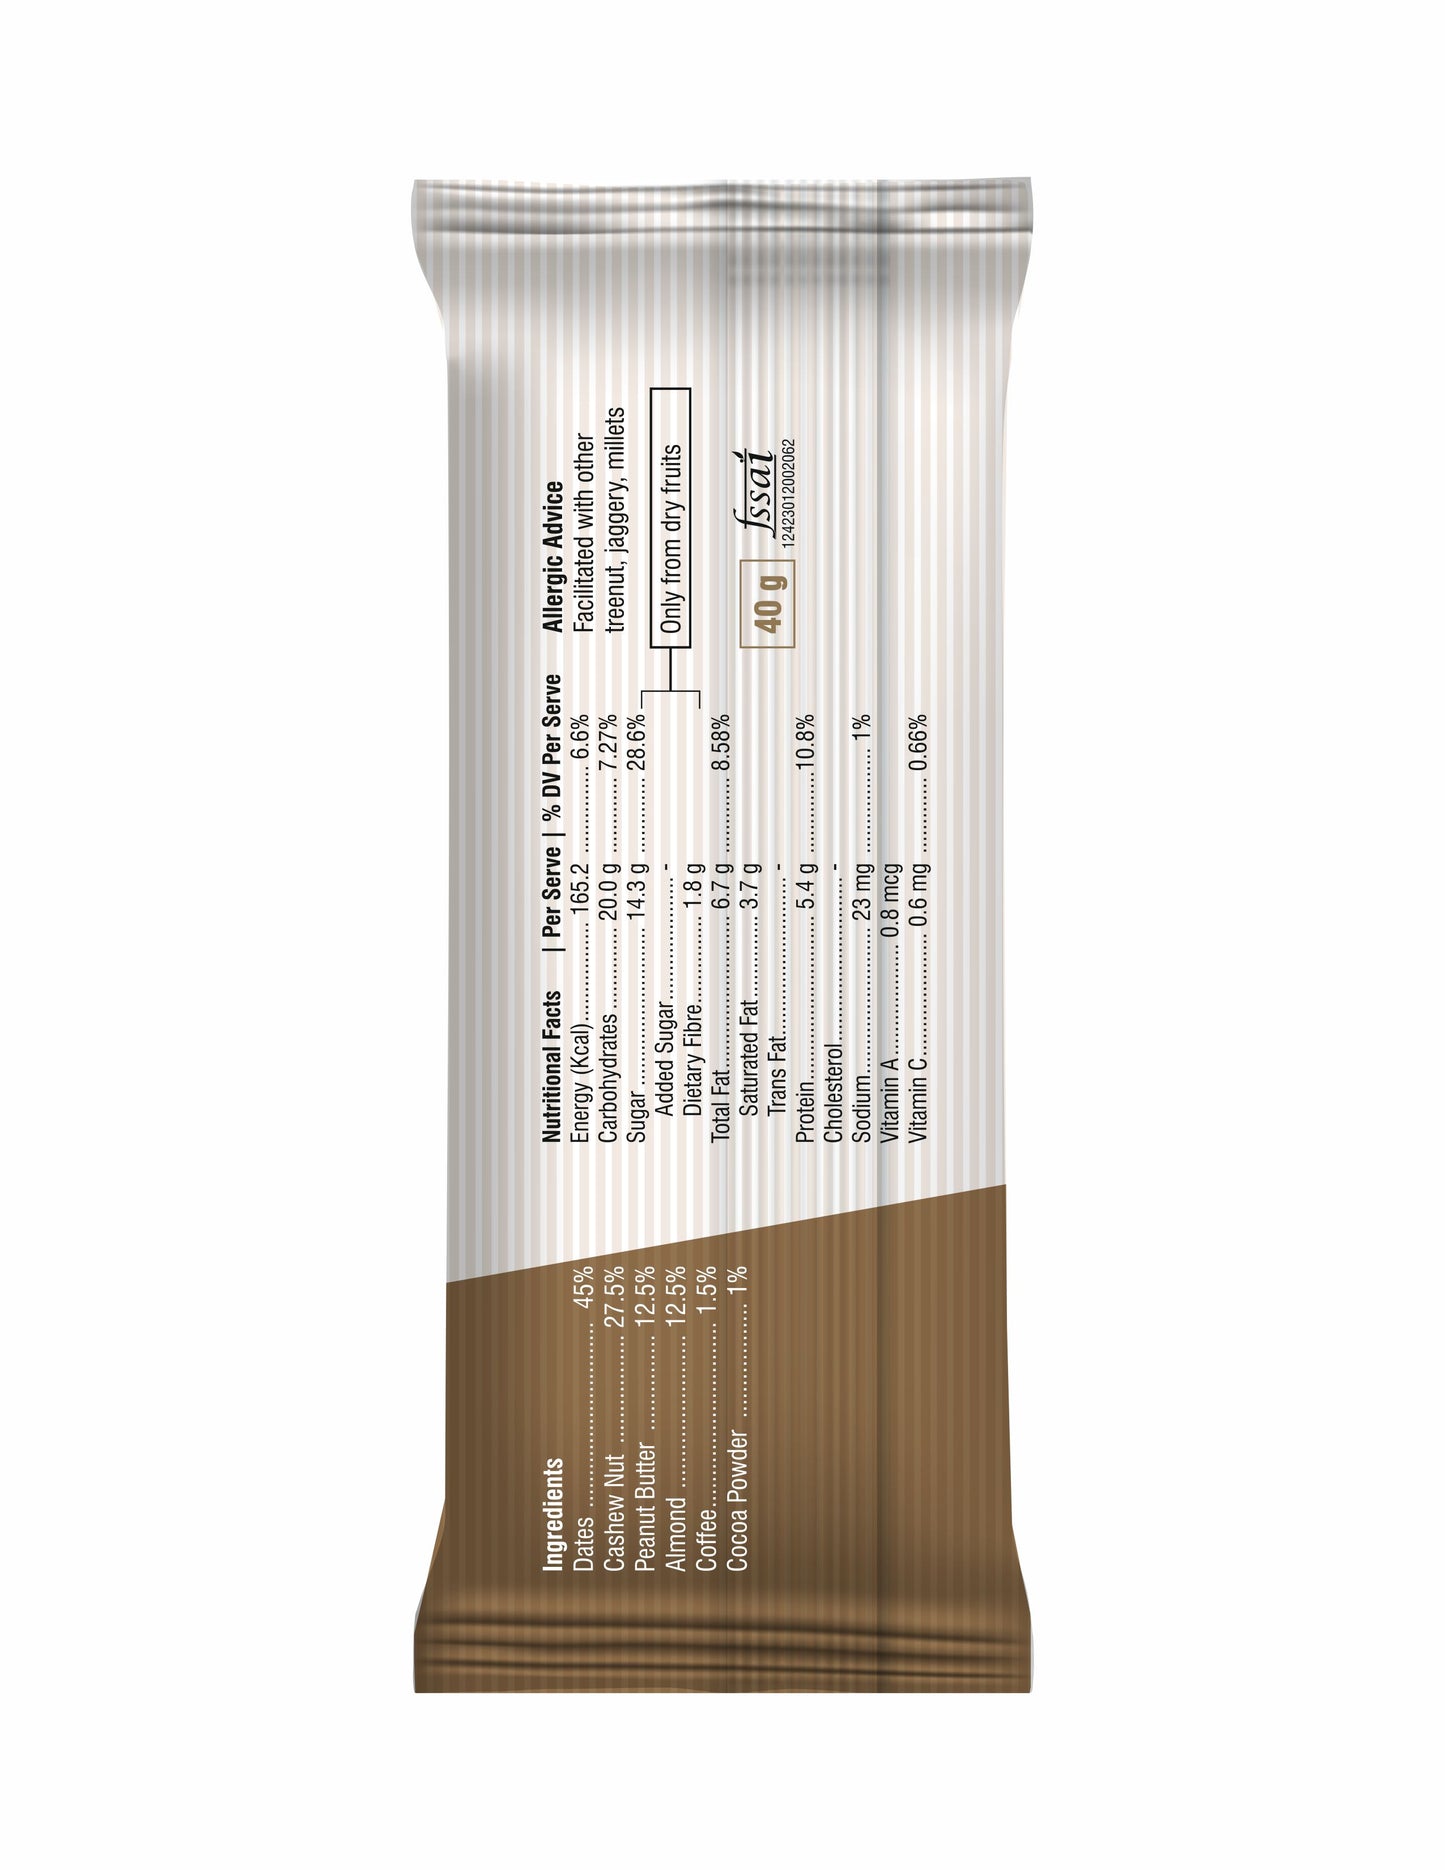 Coffee Energy Bars - Box of 10